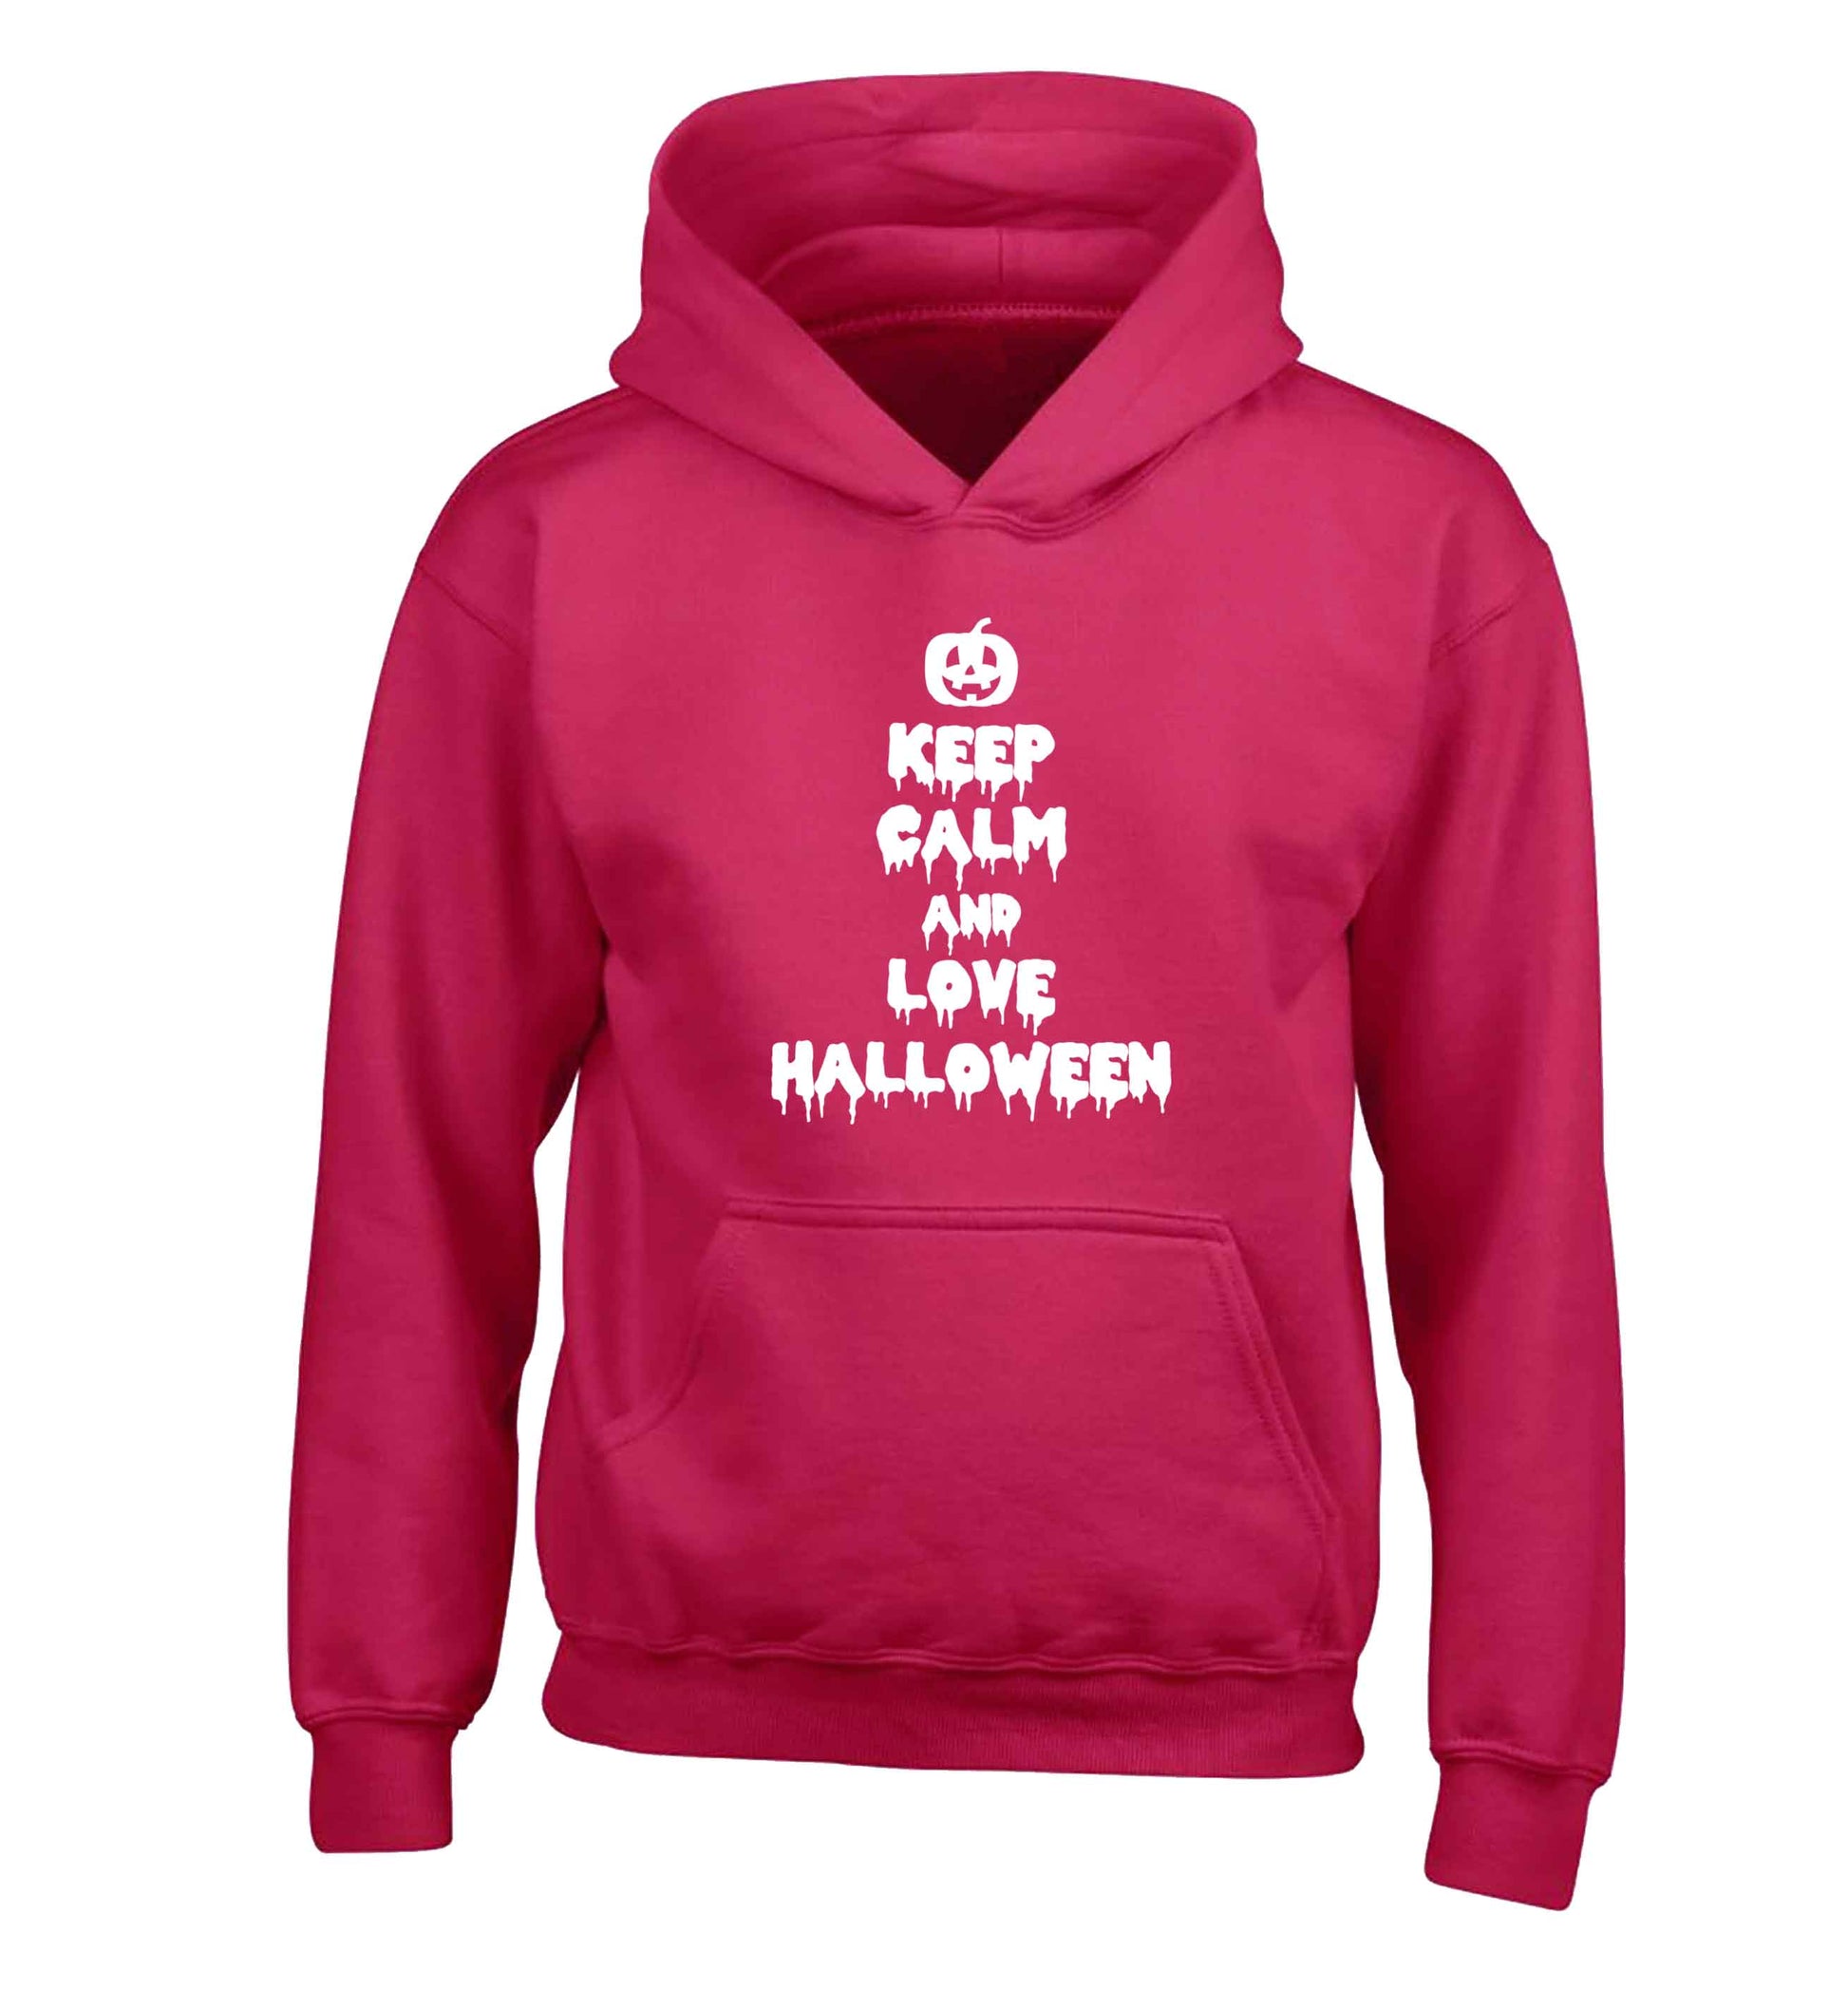 Keep calm and love halloween children's pink hoodie 12-13 Years